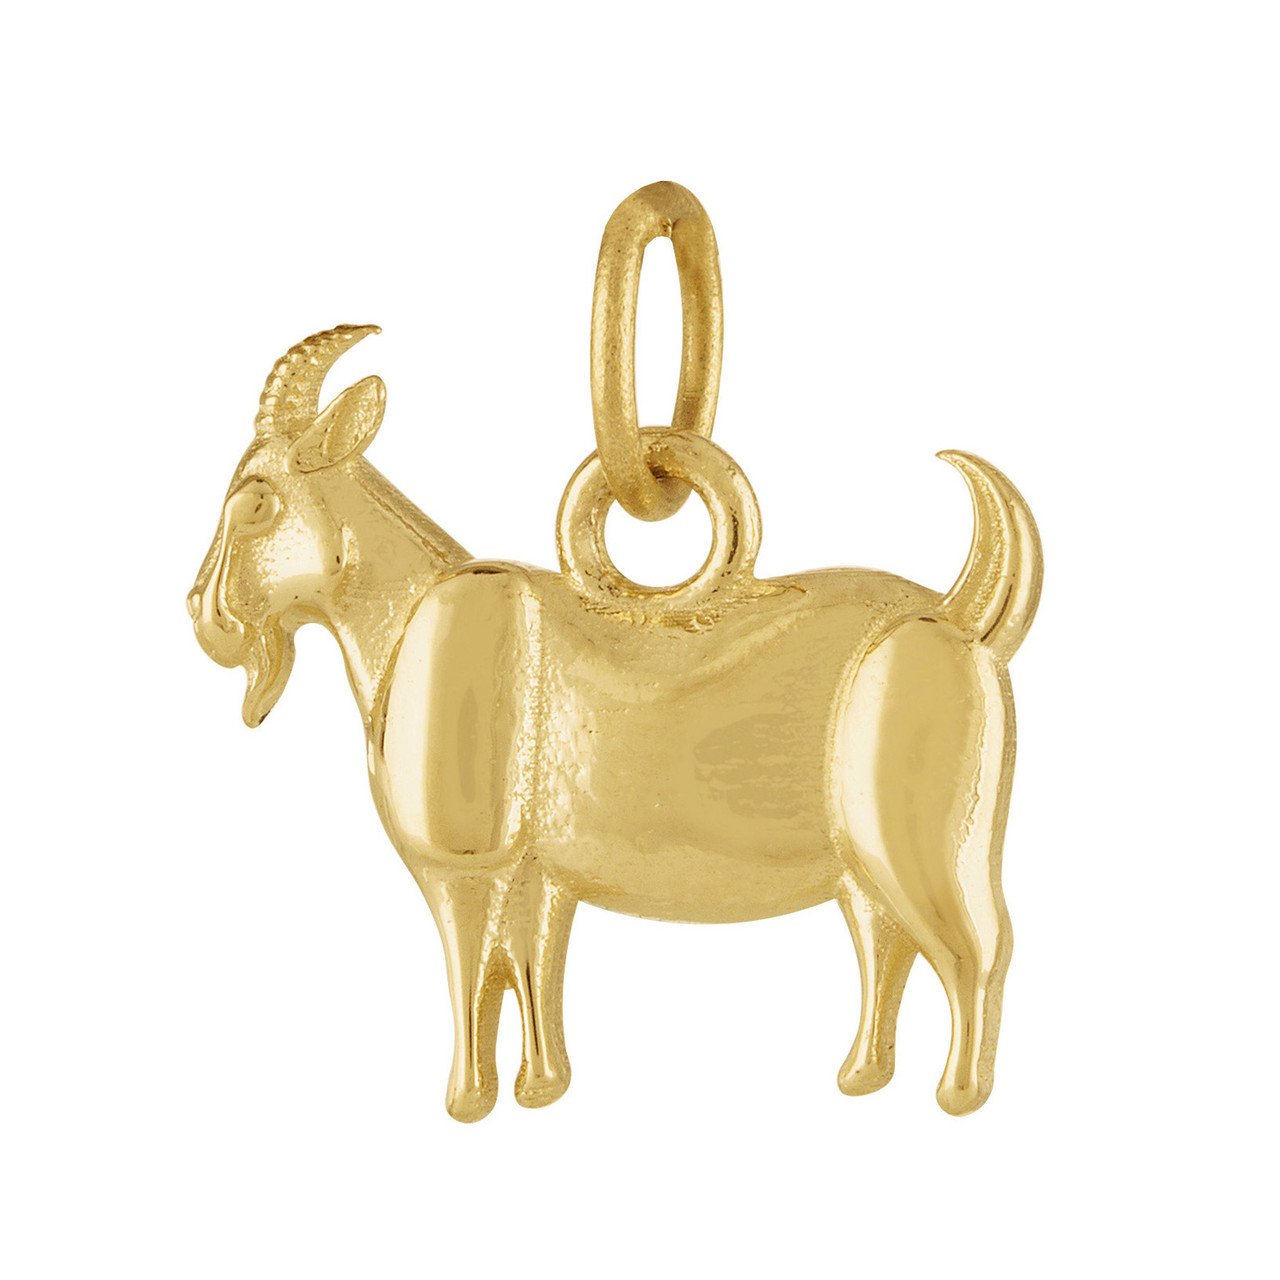 Coin Bear Gold Plated Charms Animal Pendant GP127